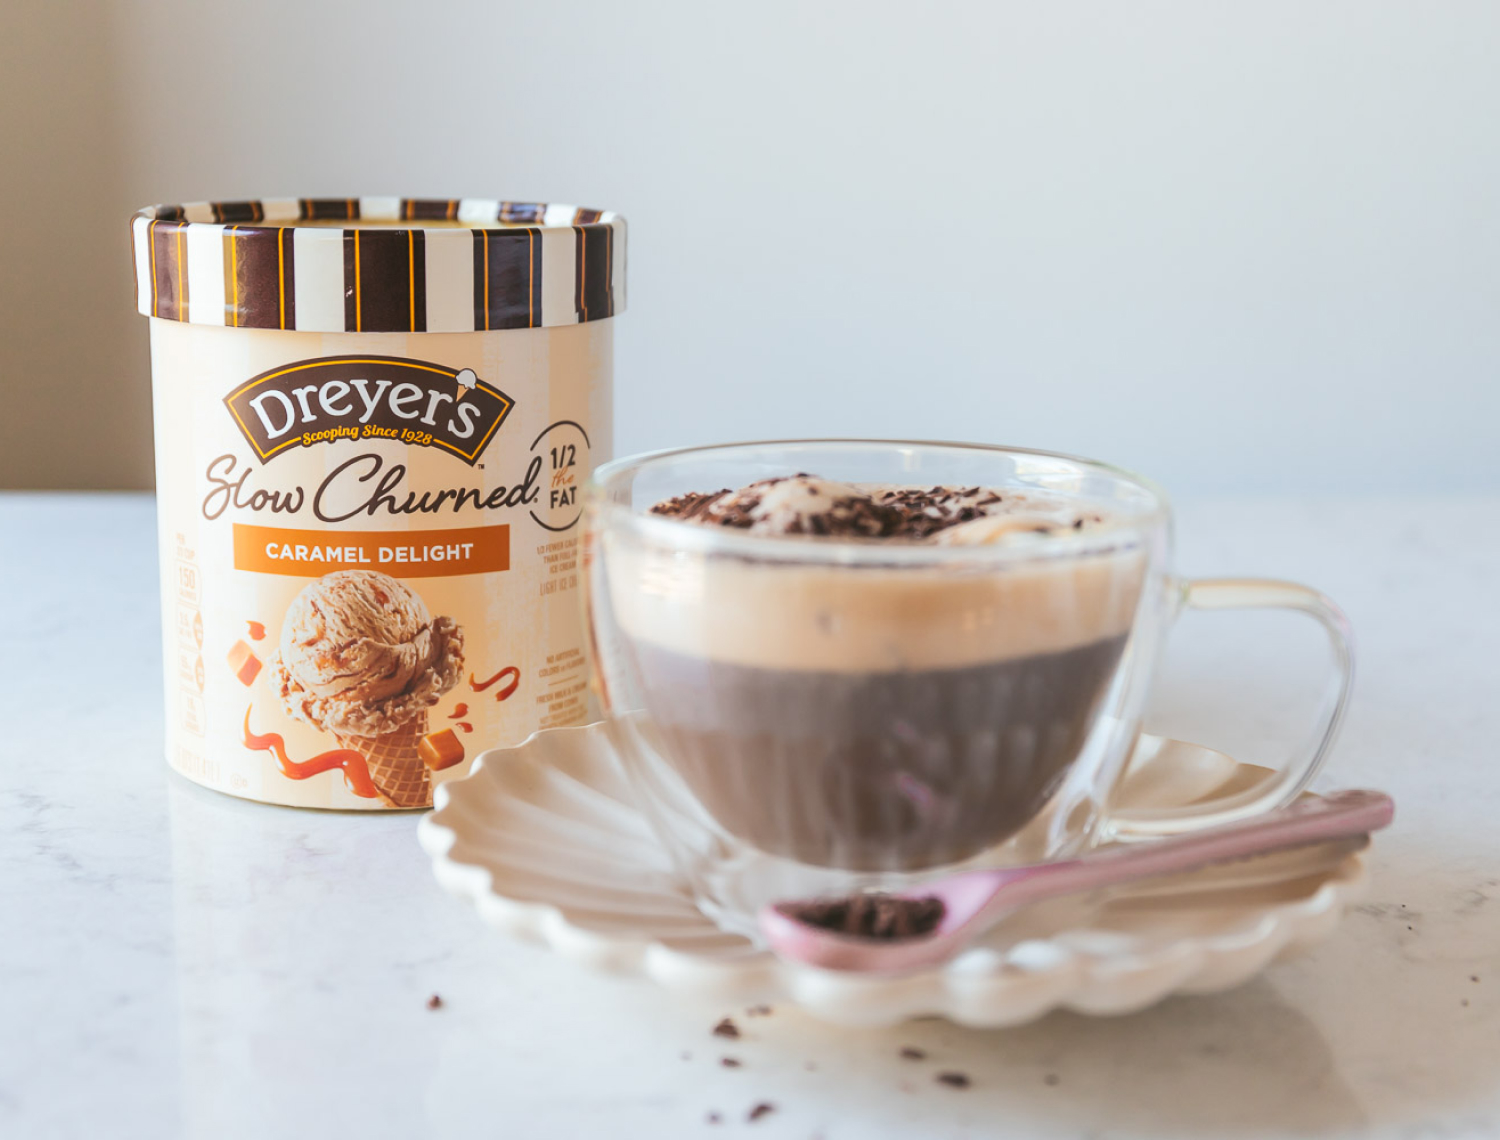 Mocha topped with Dreyer's slow-churned caramel ice cream